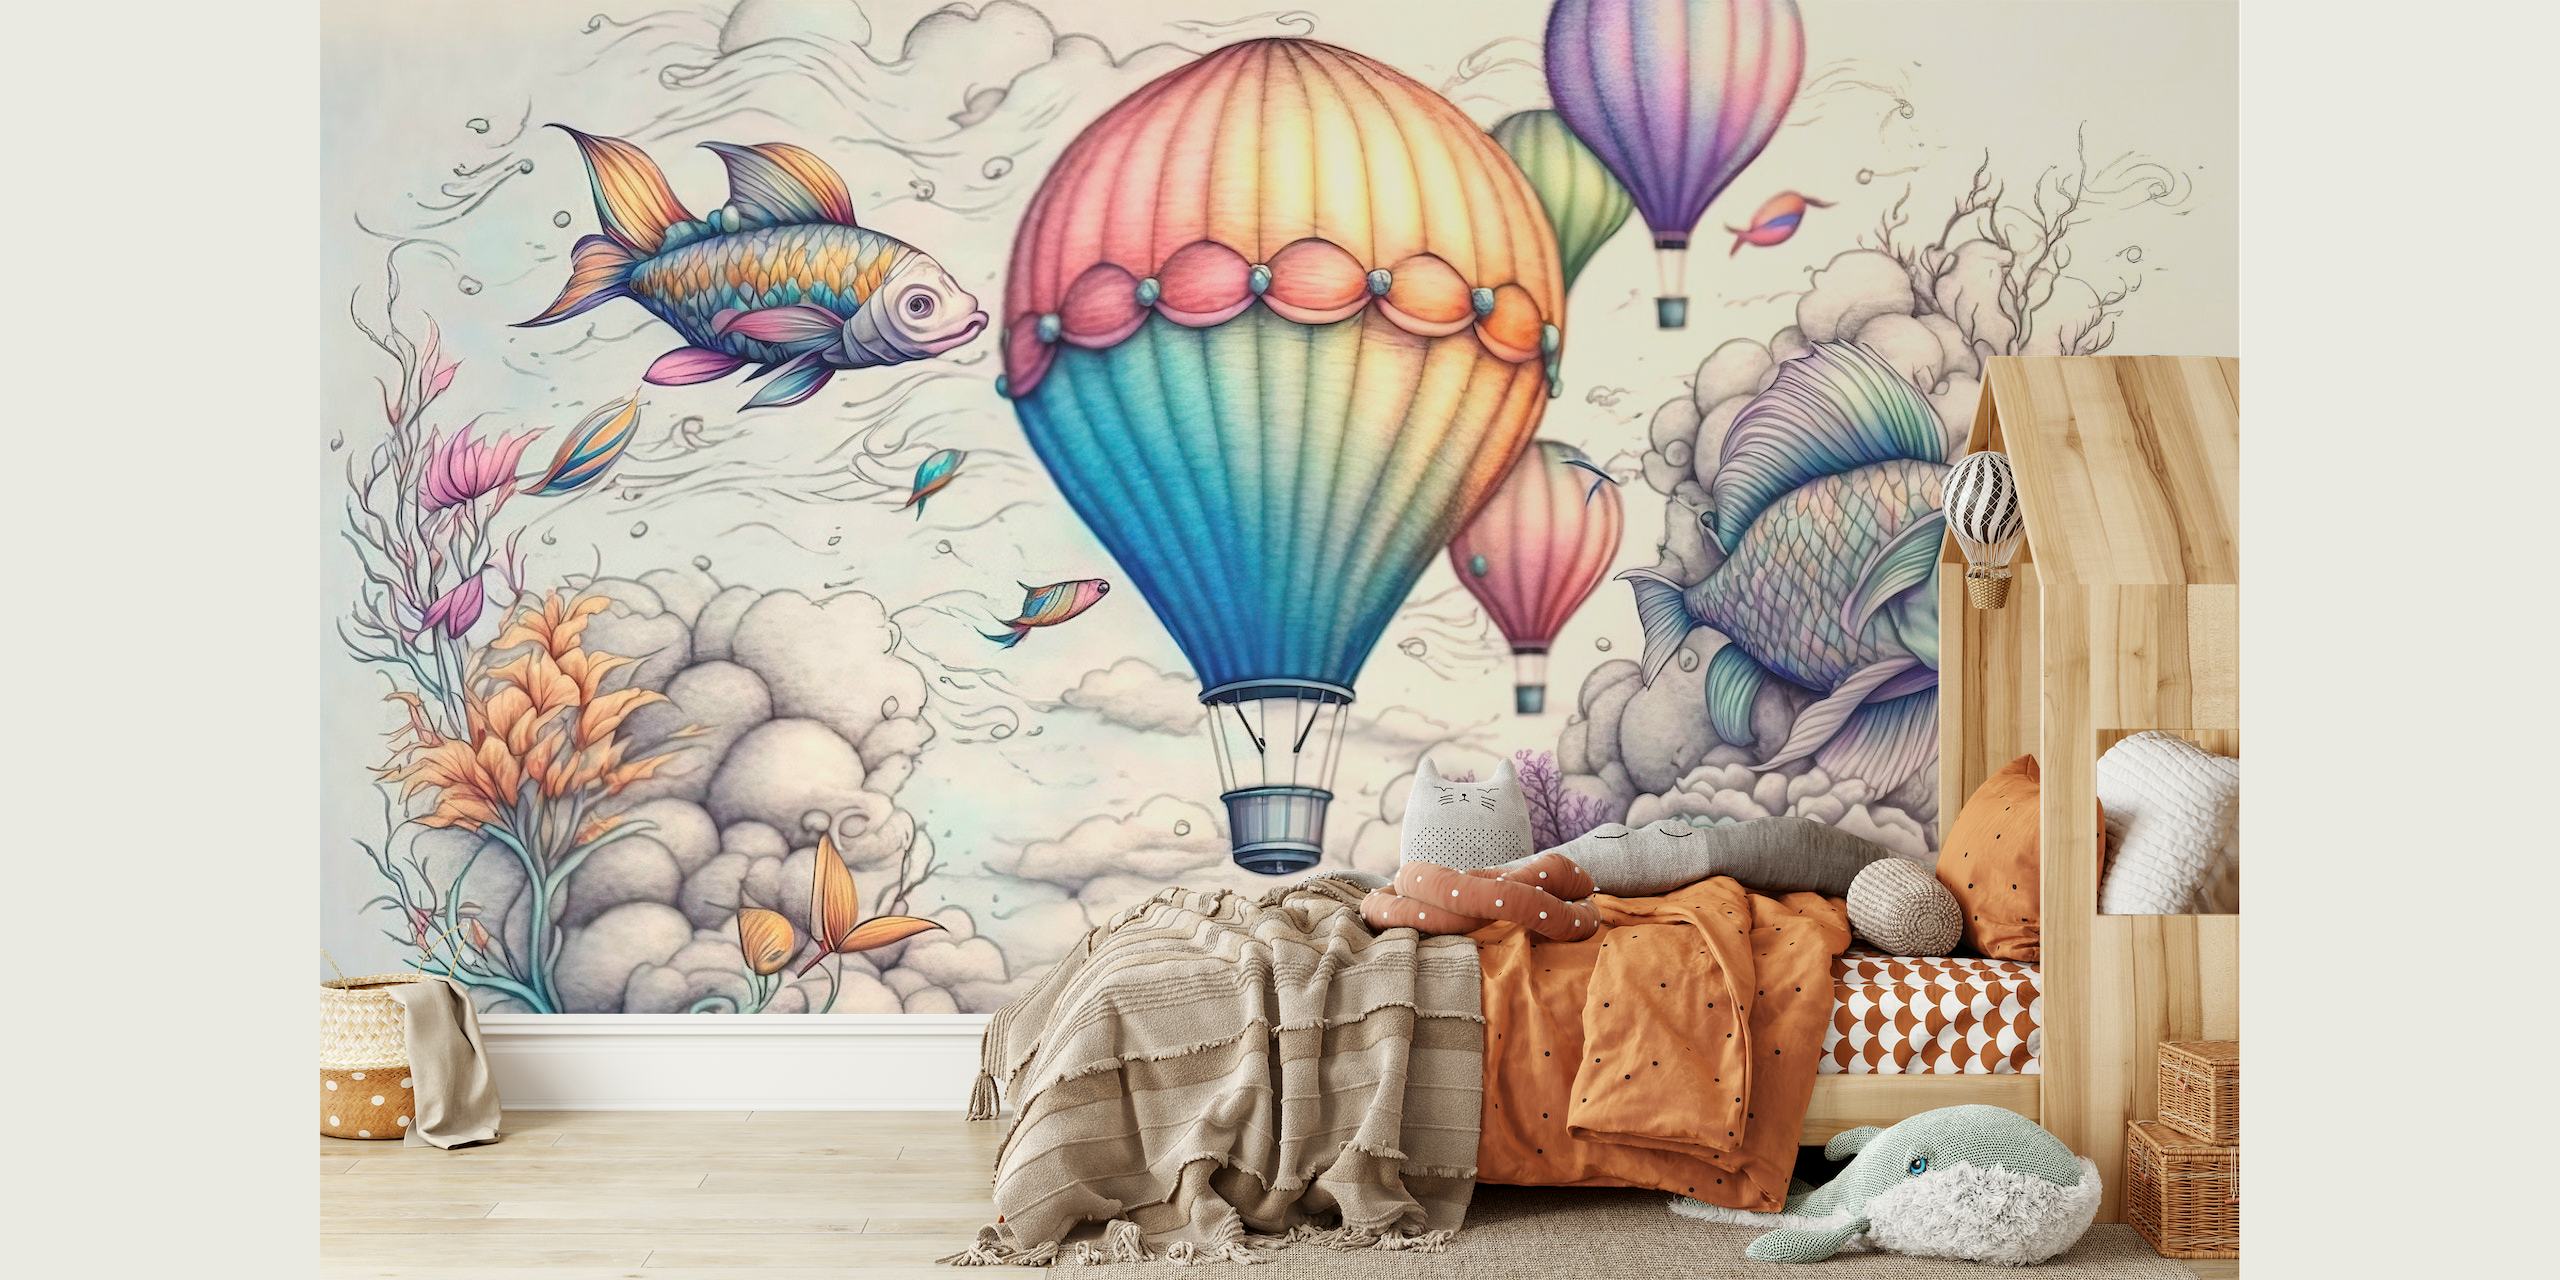 Fish and Ballon wallpaper